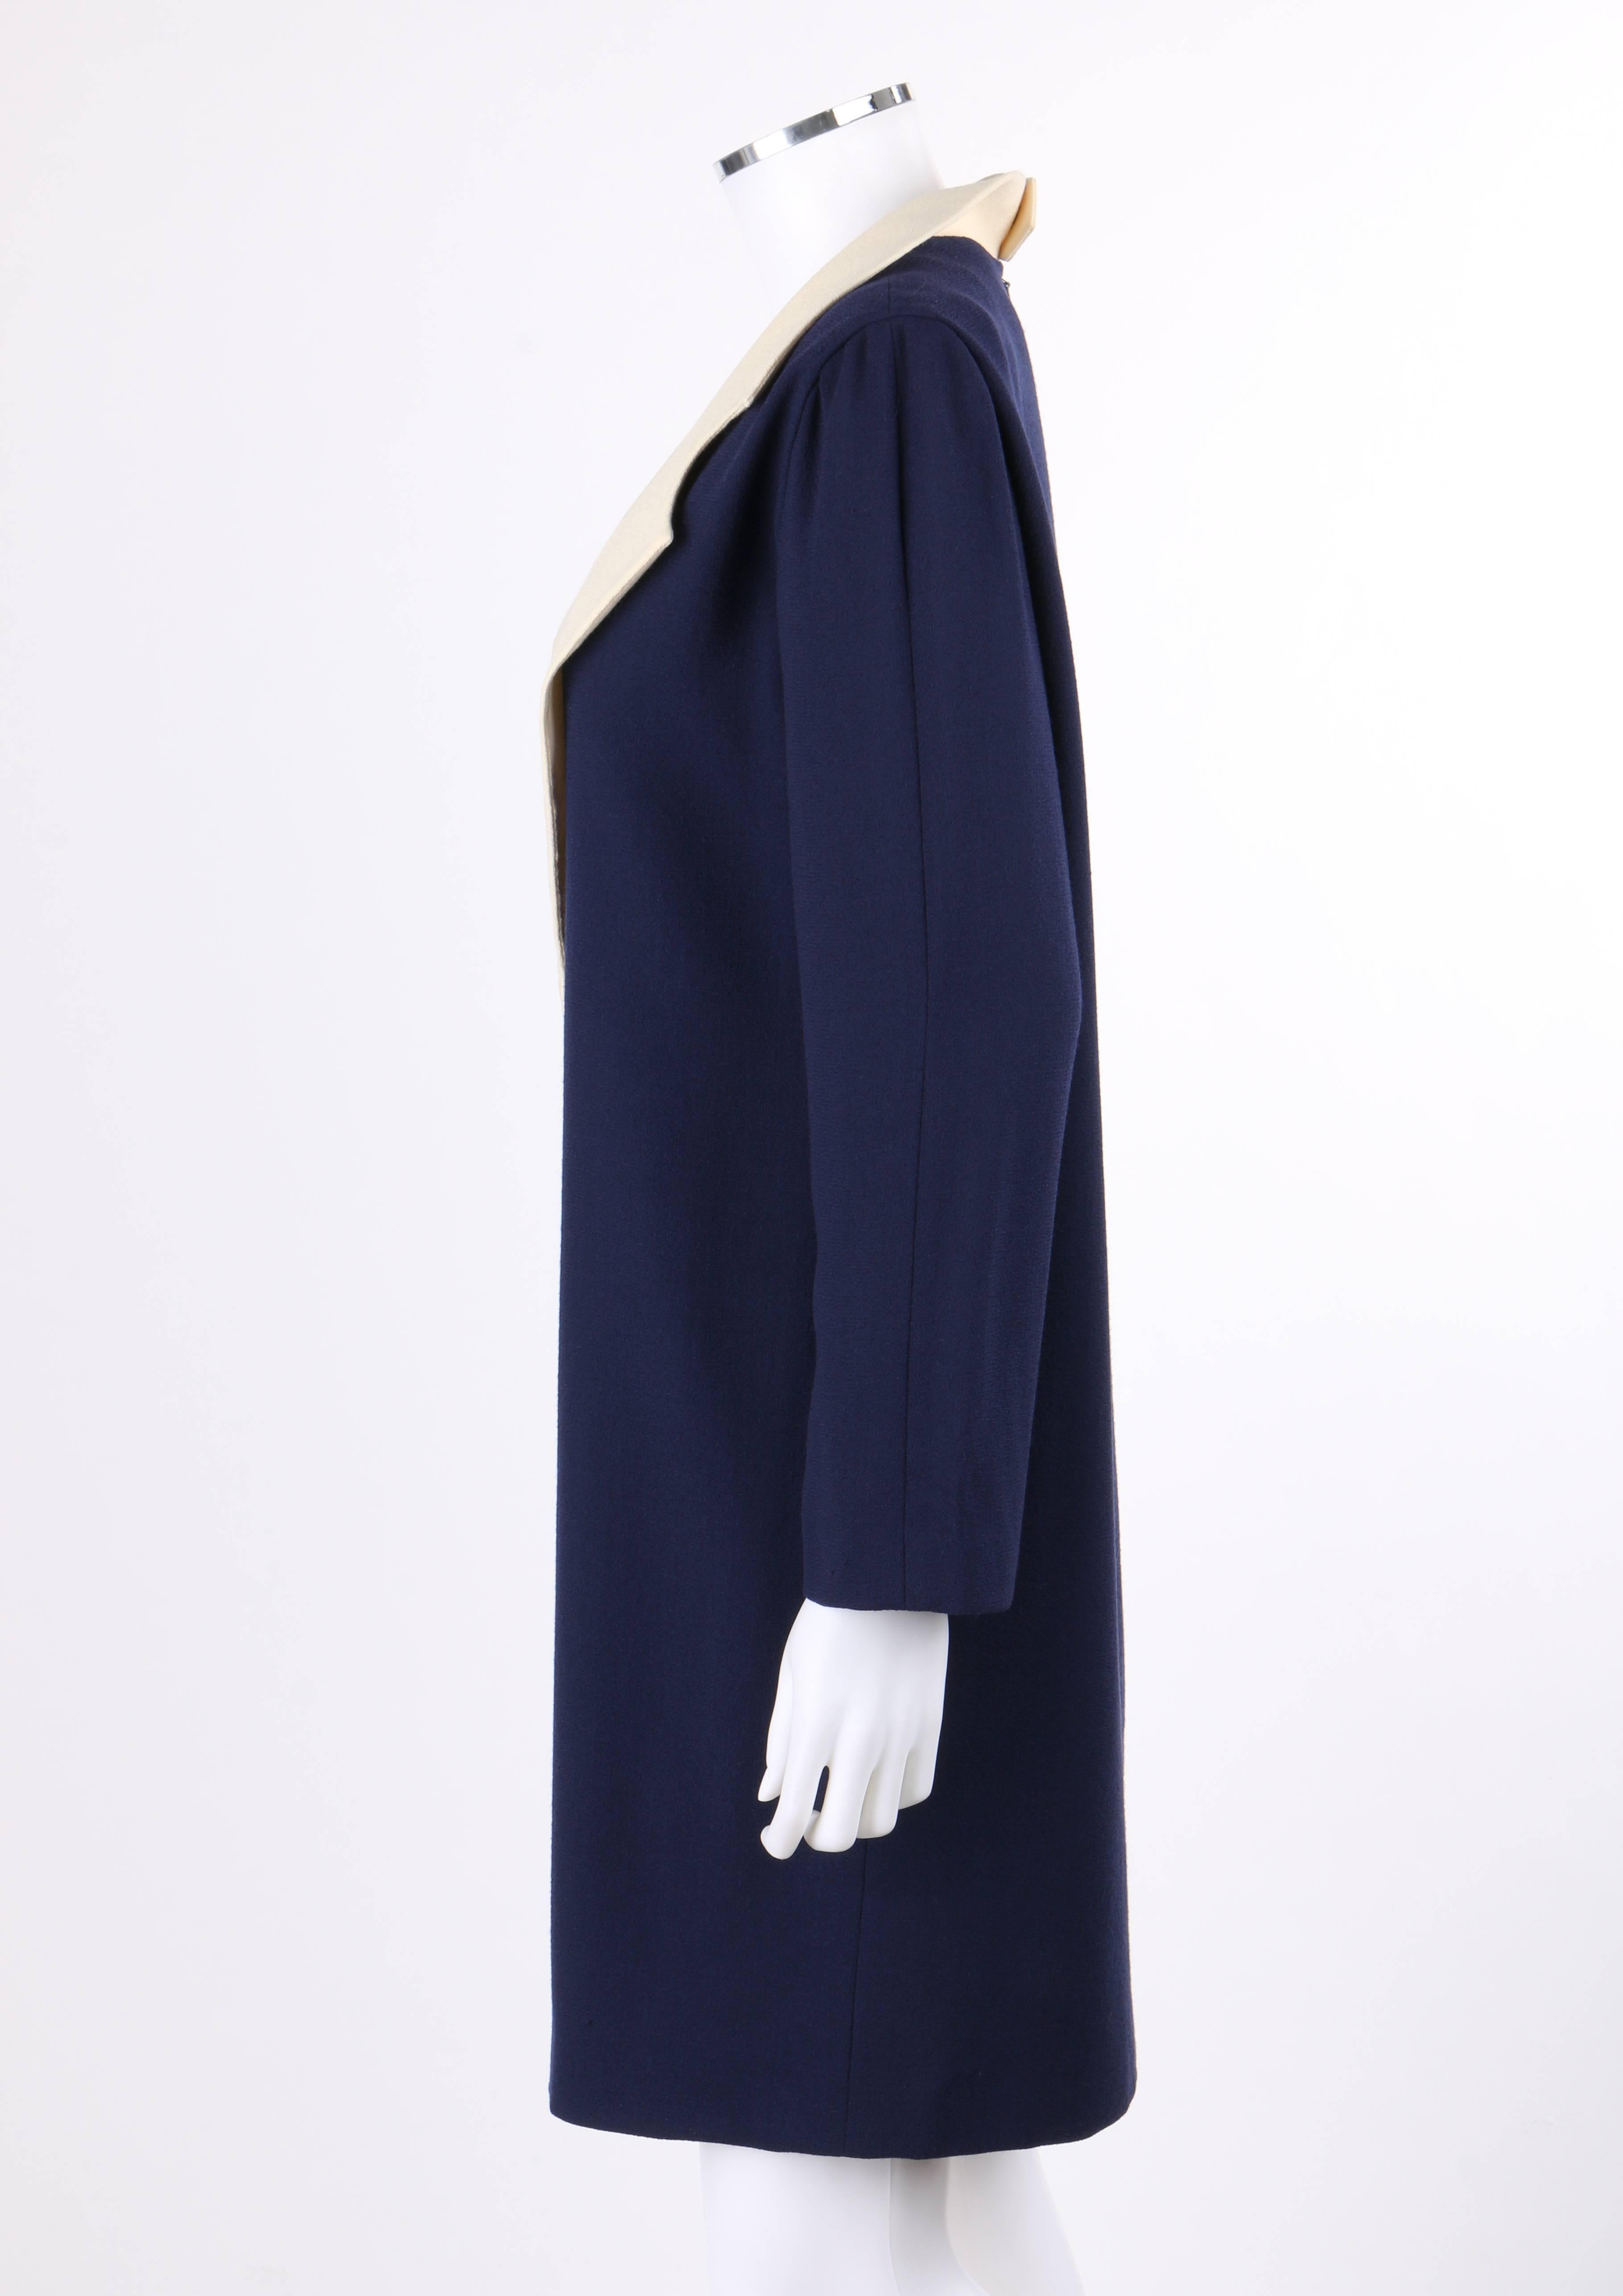 PIERRE CARDIN c.1992 Navy Blue & Ivory Wool Statement Collar Mod Shift Dress 1